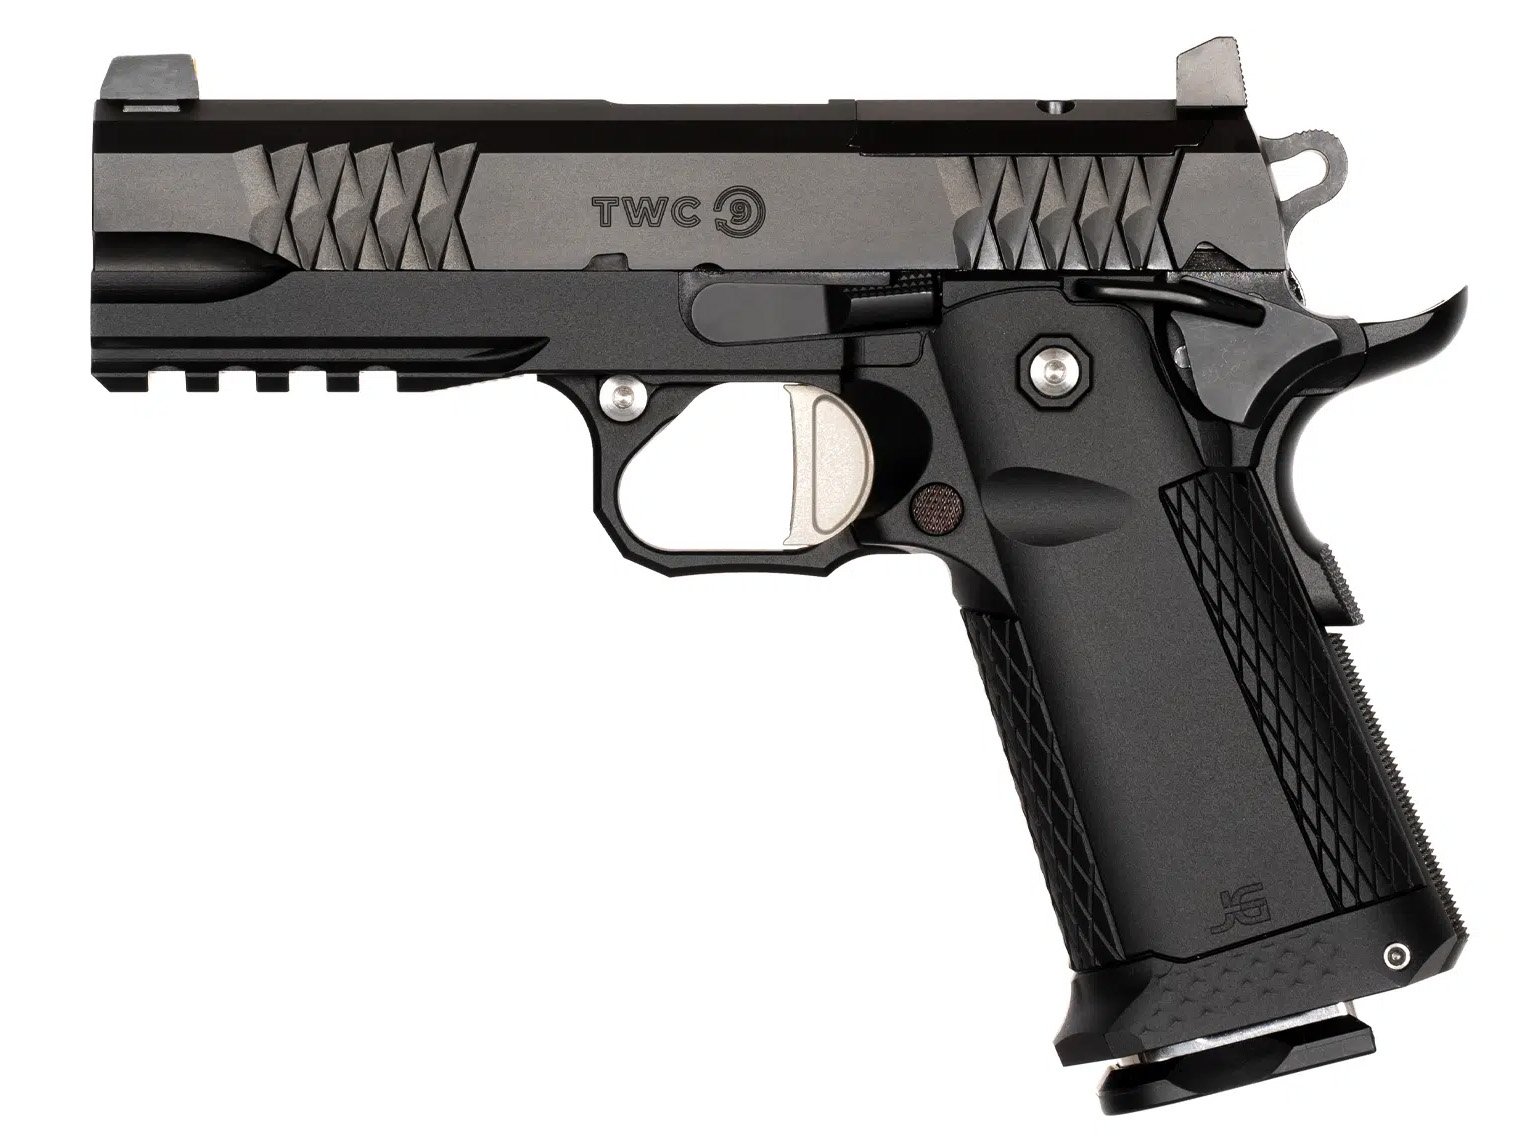 Jacob Grey TWC 9 DS 1911 9mm pistol